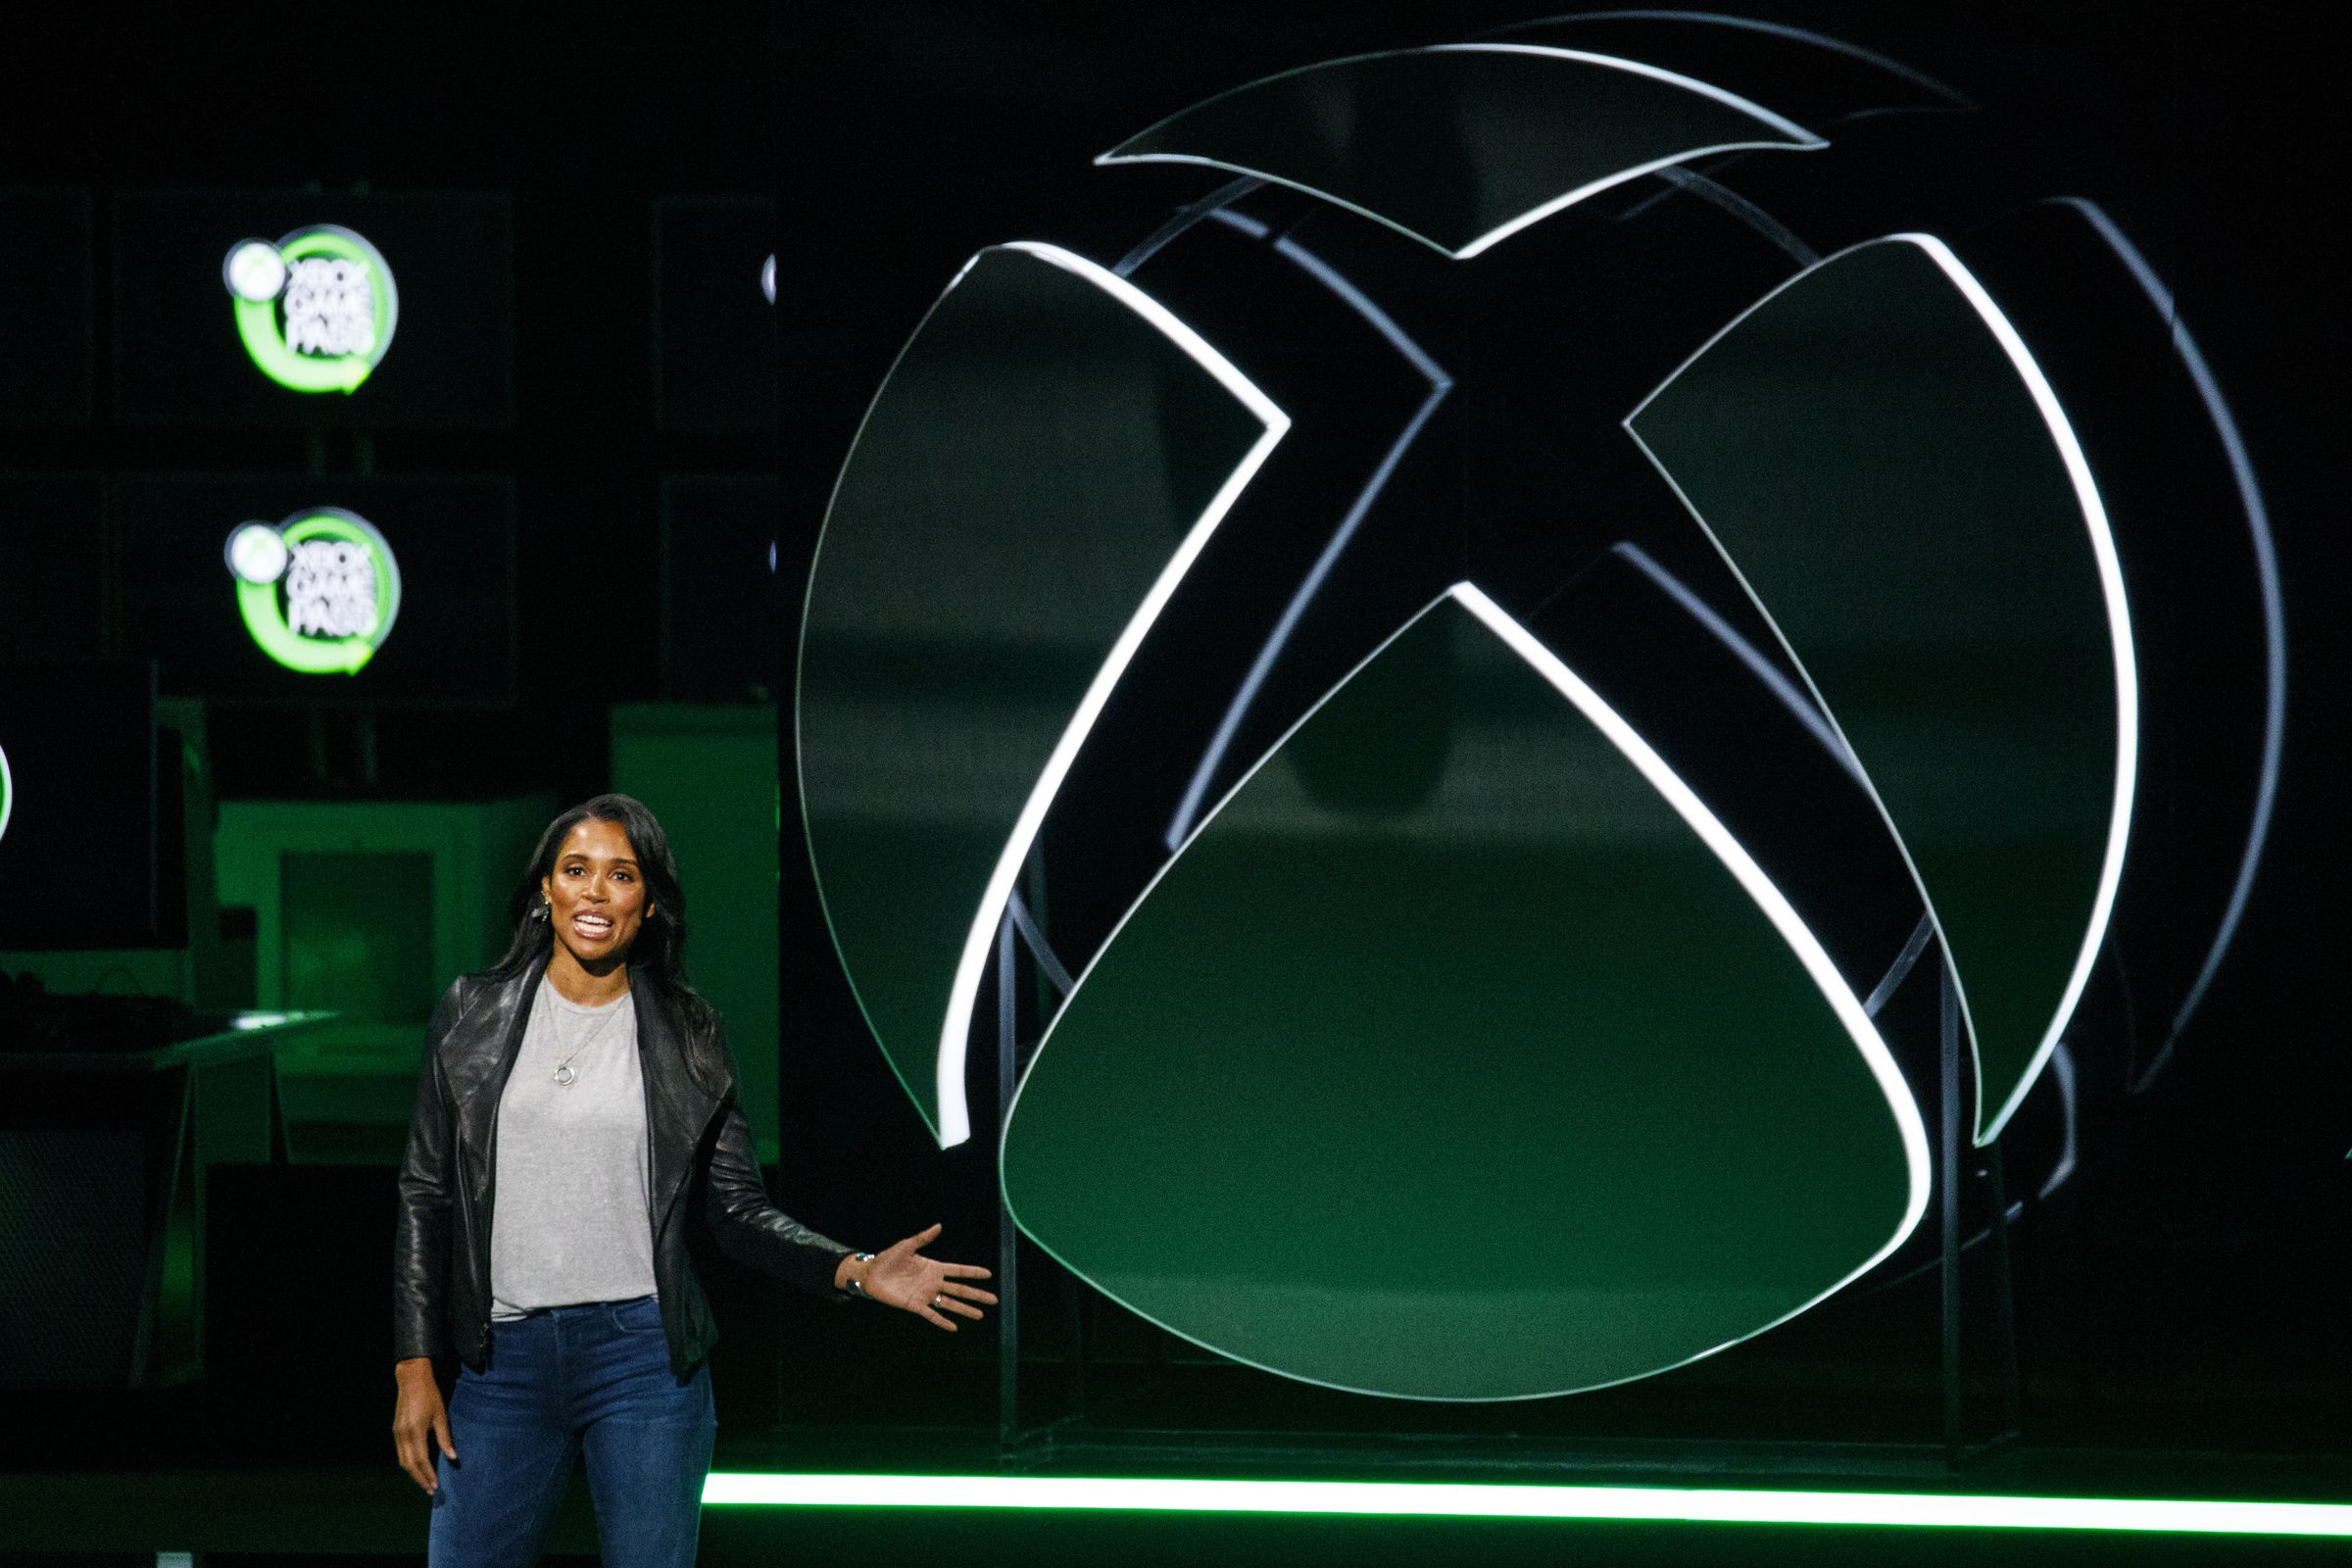 Microsoft Corp. Xbox Event Ahead Of 2019 E3 Electronic Entertainment Expo